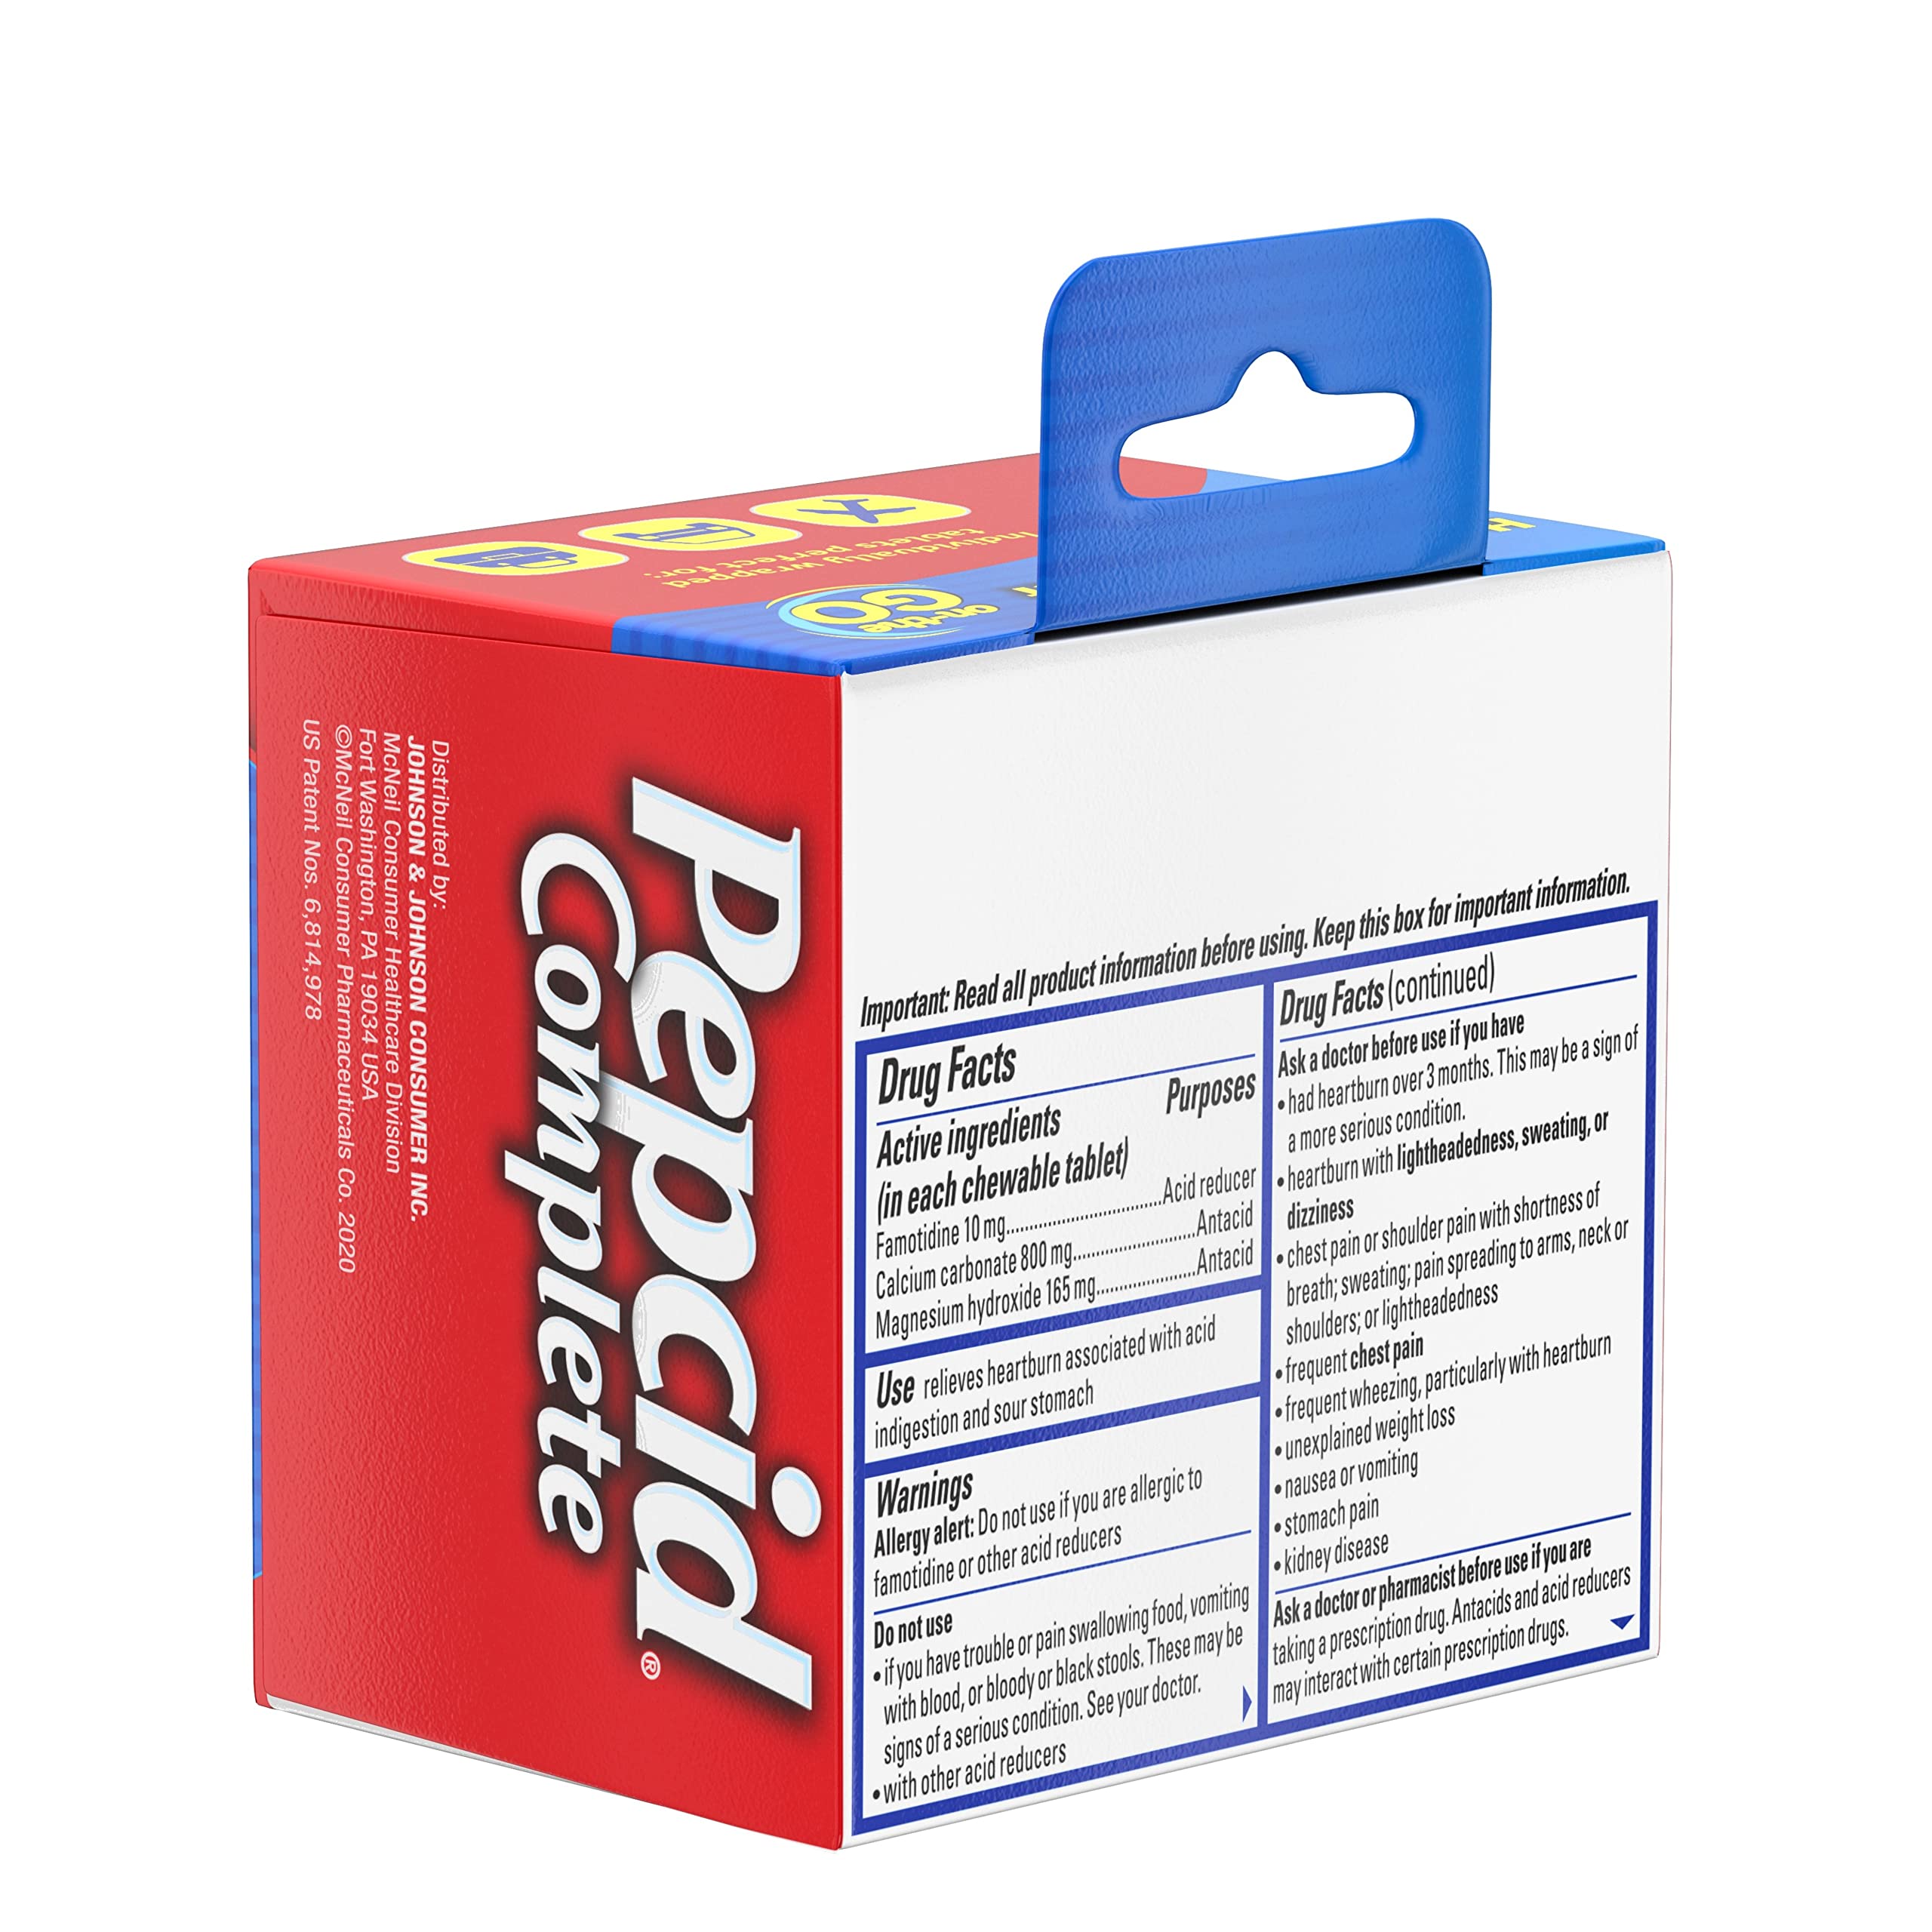 Pepcid Complete Dual Action Acid Reducer + Antacid Chewable Tablets, Berry Flavor, 8 ct.